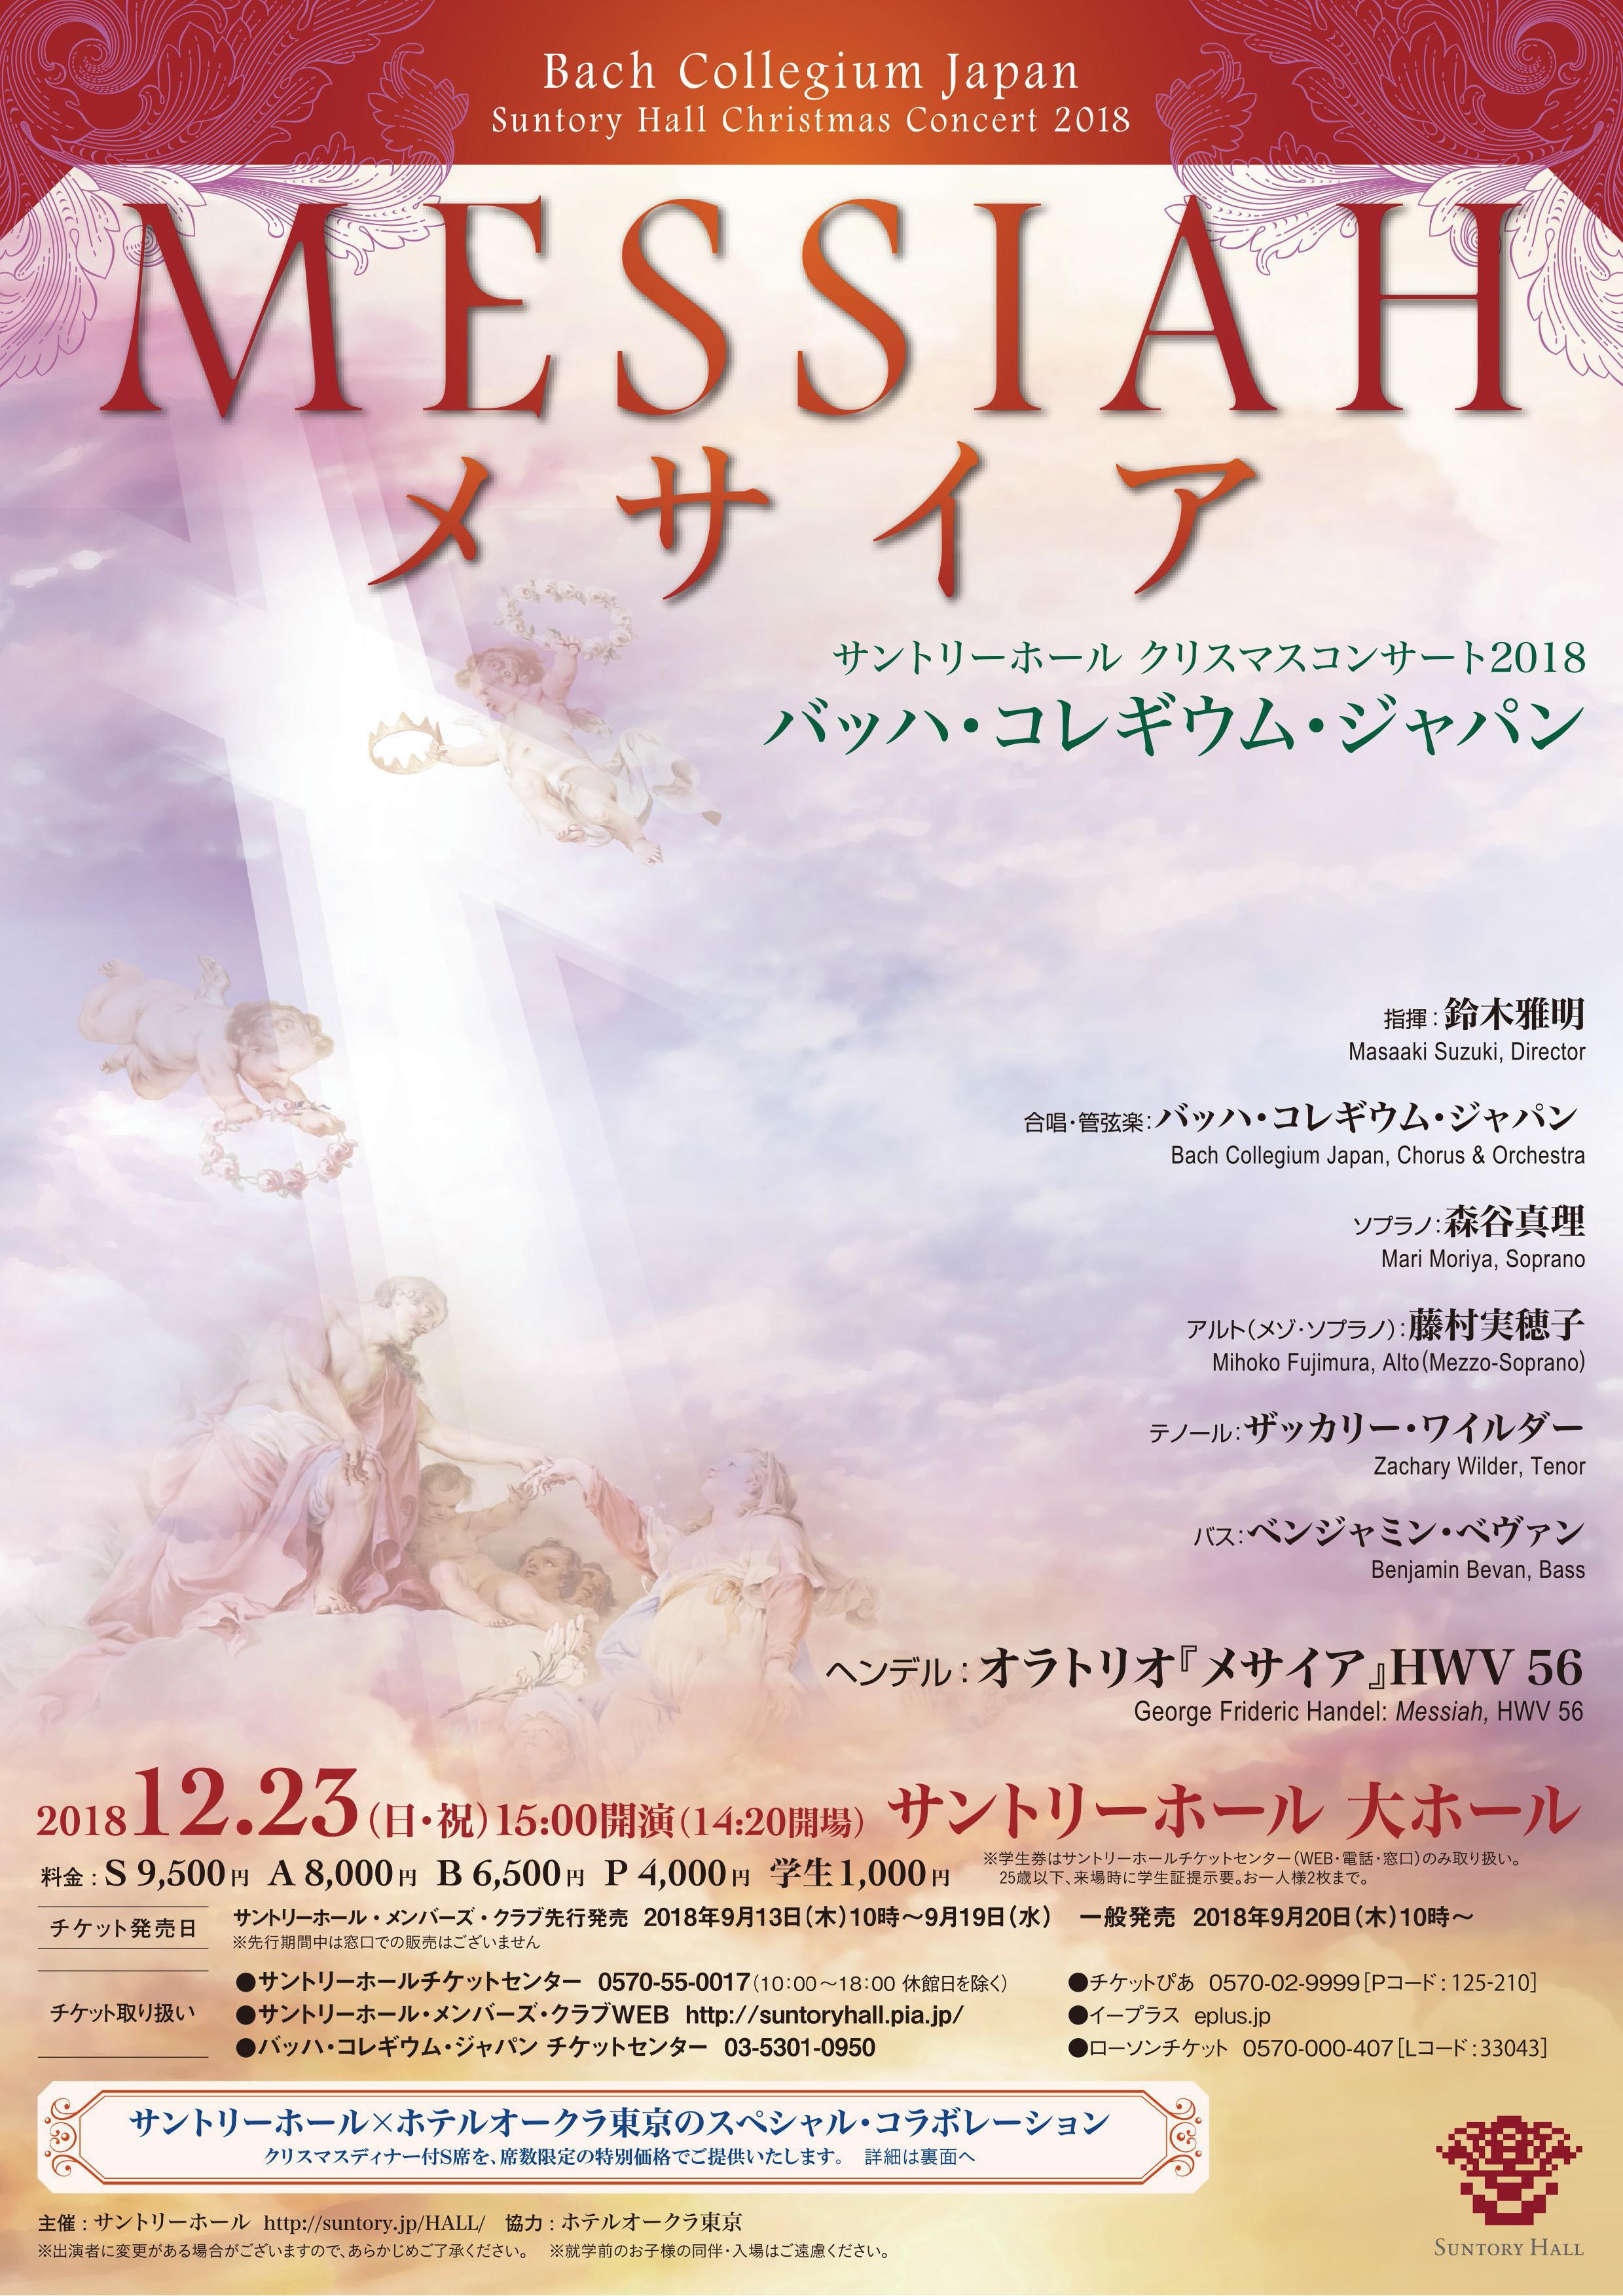 Suntory Hall Christmas Concert 18bach Collegium Japan Messiah Performance Schedule Presented By Suntory Hall